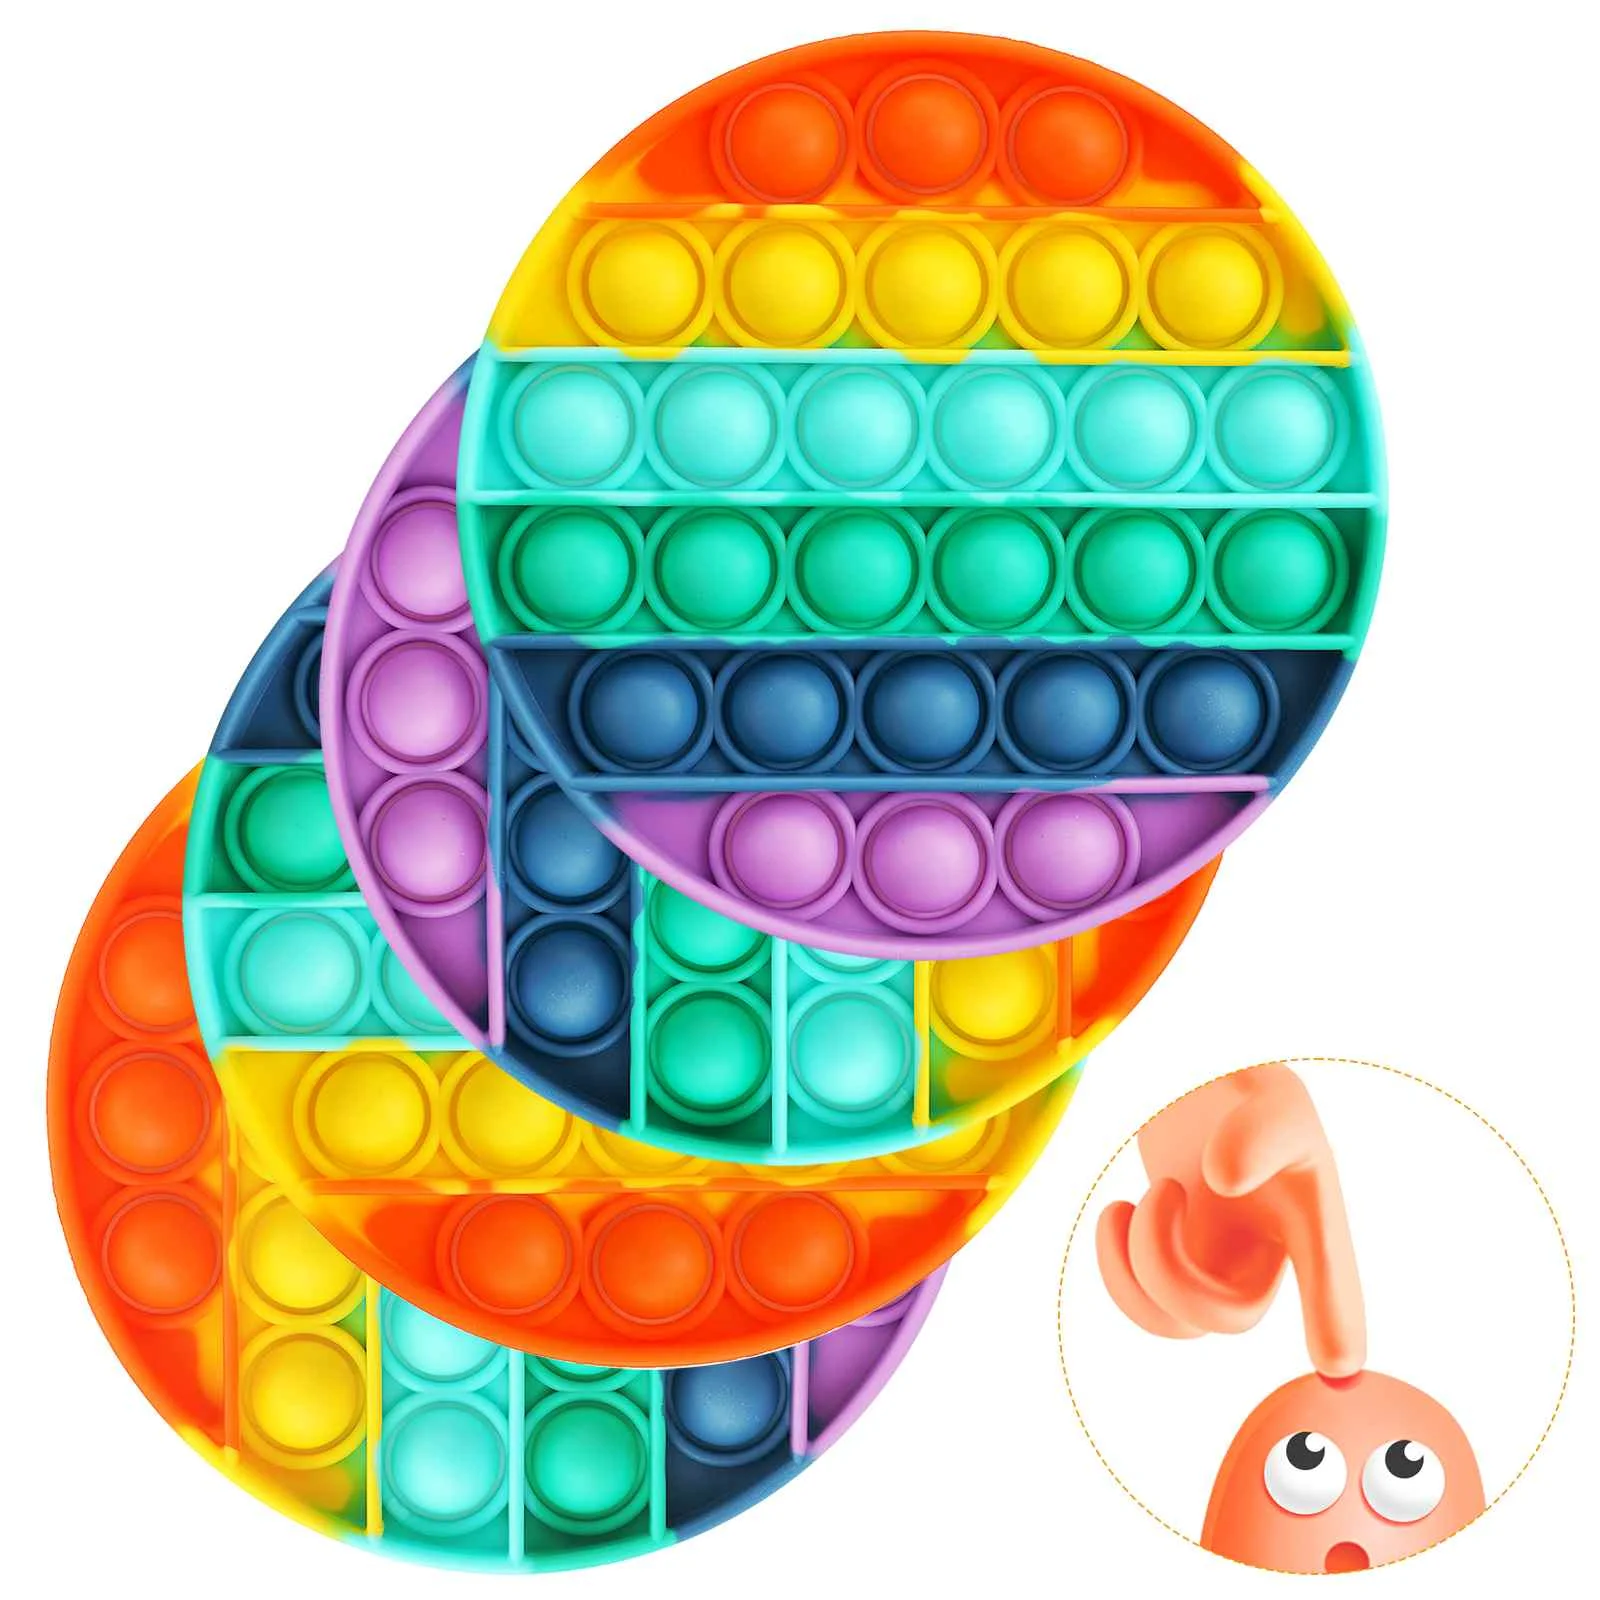 

4Pcs Push Pop Its Bubble Sensory Fidget Toys Bubbles Stress Reliever Silicone Pressure Relieving Toy For Kids Autism Adult